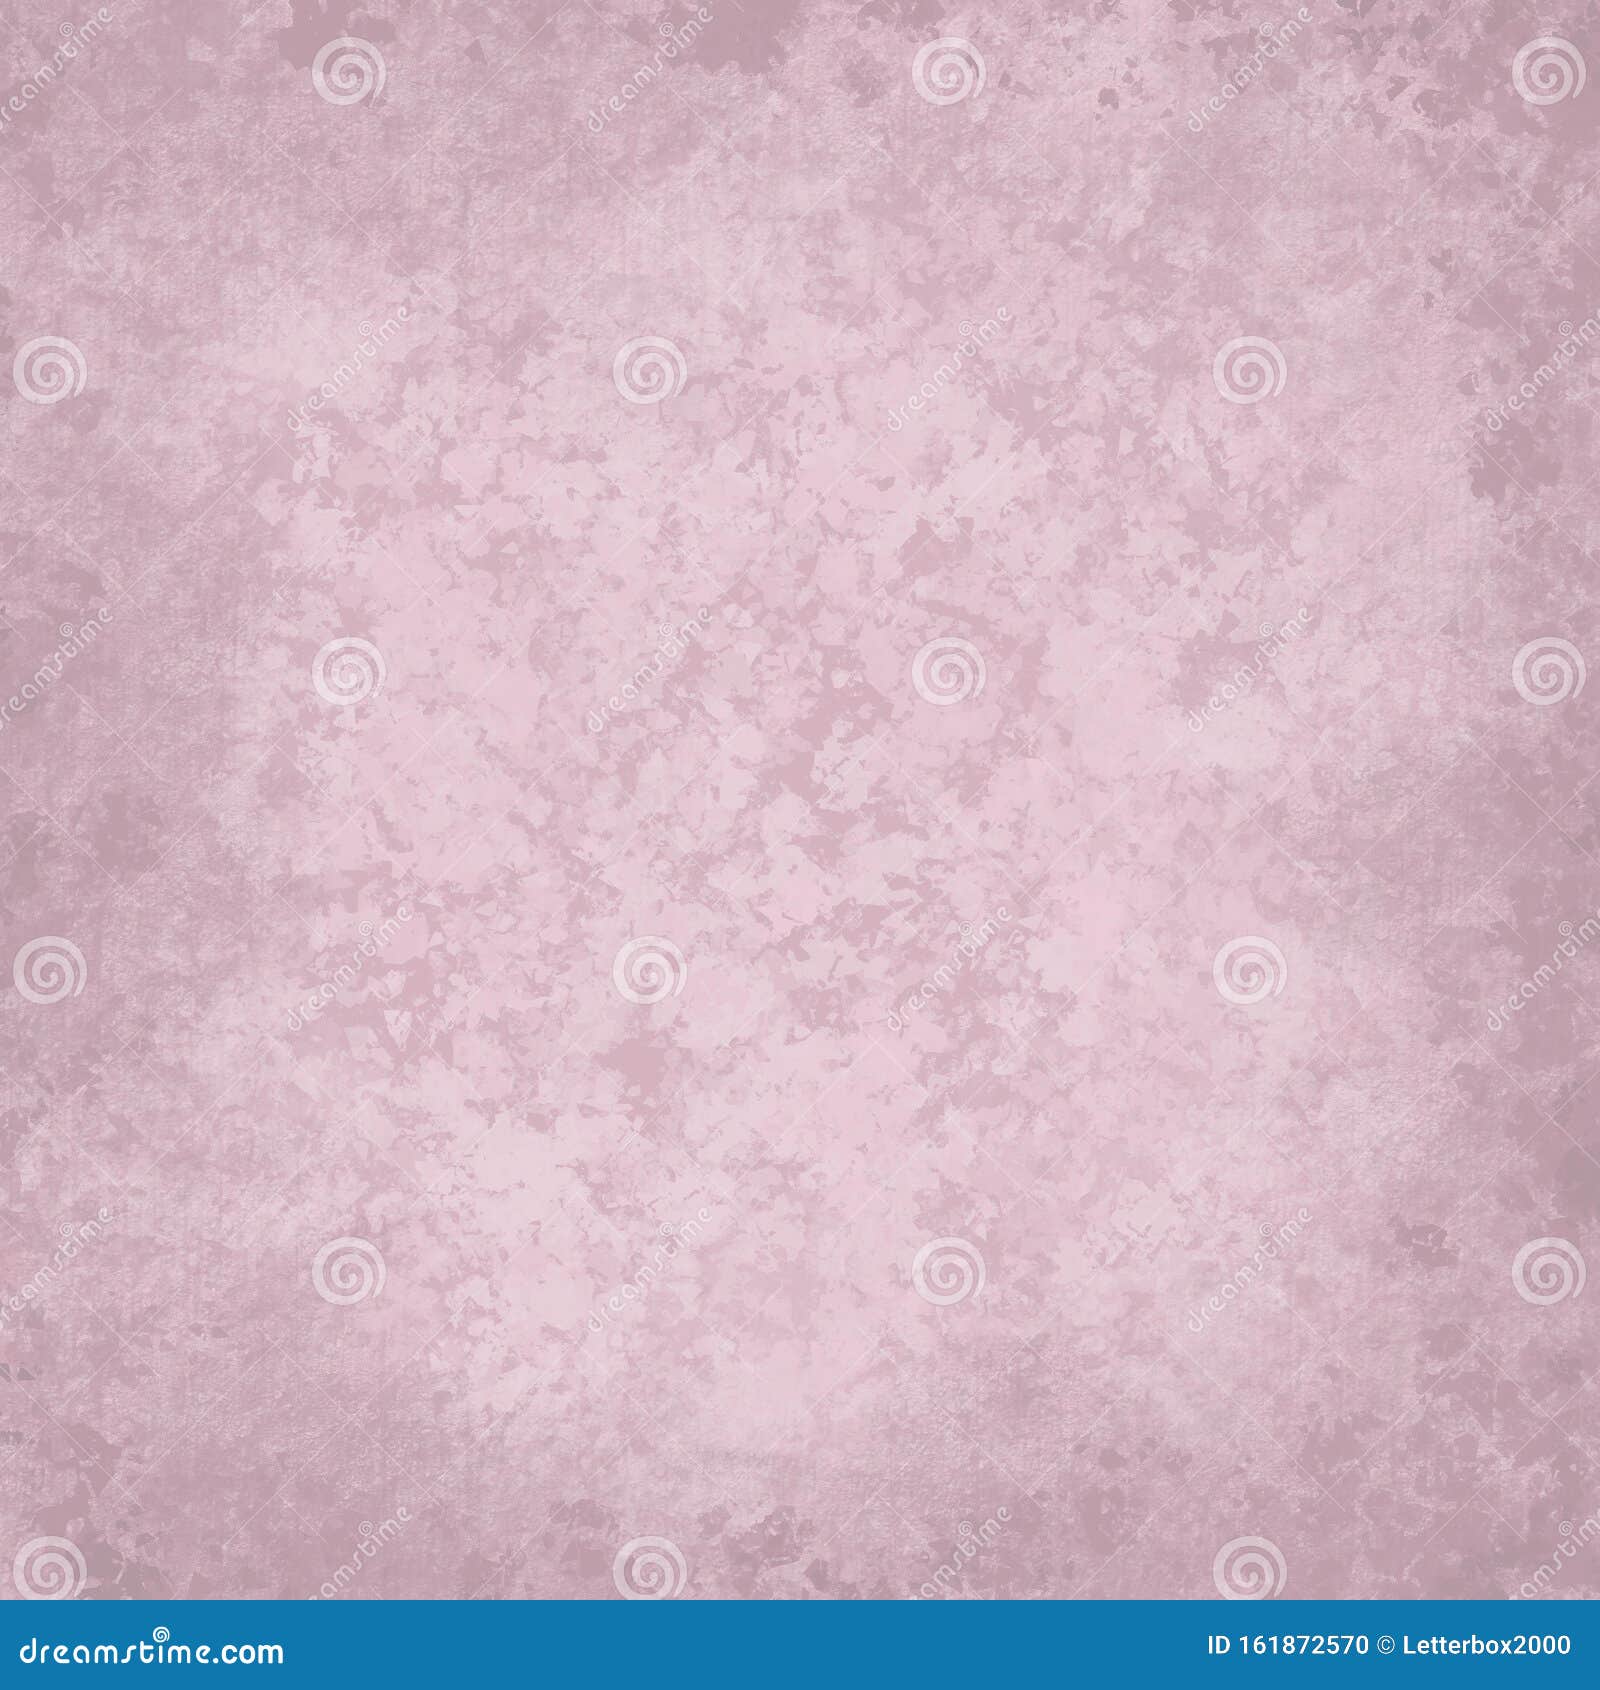 Pastel Pink Grey Vintage Background with Grunge Texture and Dark Vignette .  Abstract Background for Graphic Design. Stock Illustration - Illustration  of element, design: 161872570